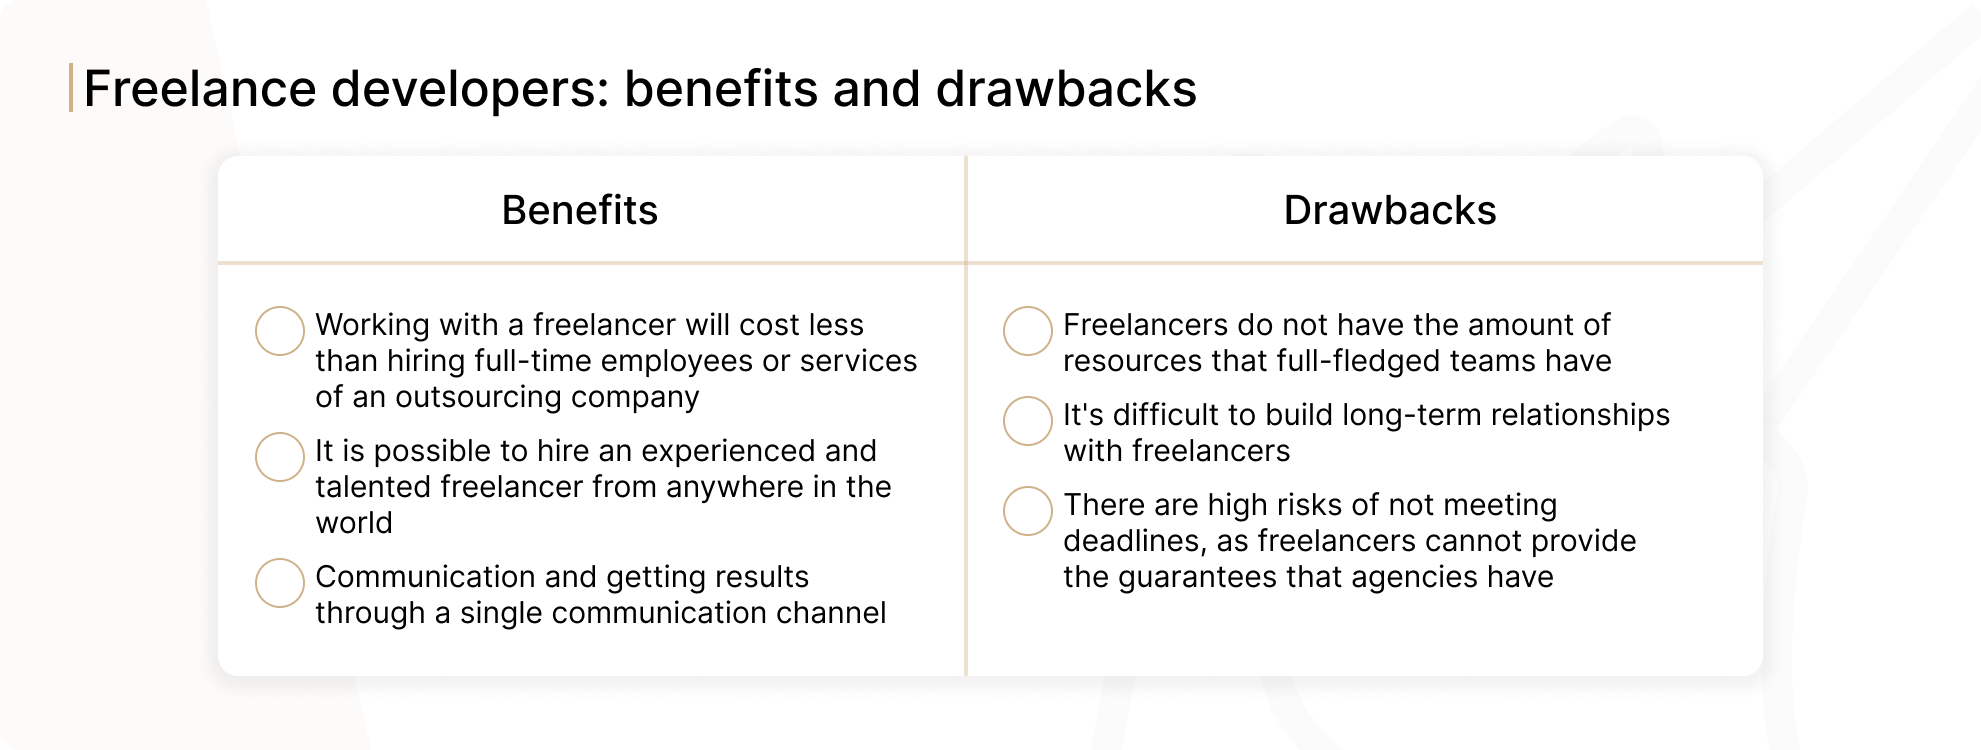 Benefits and drawbacks of hiring freelance developers